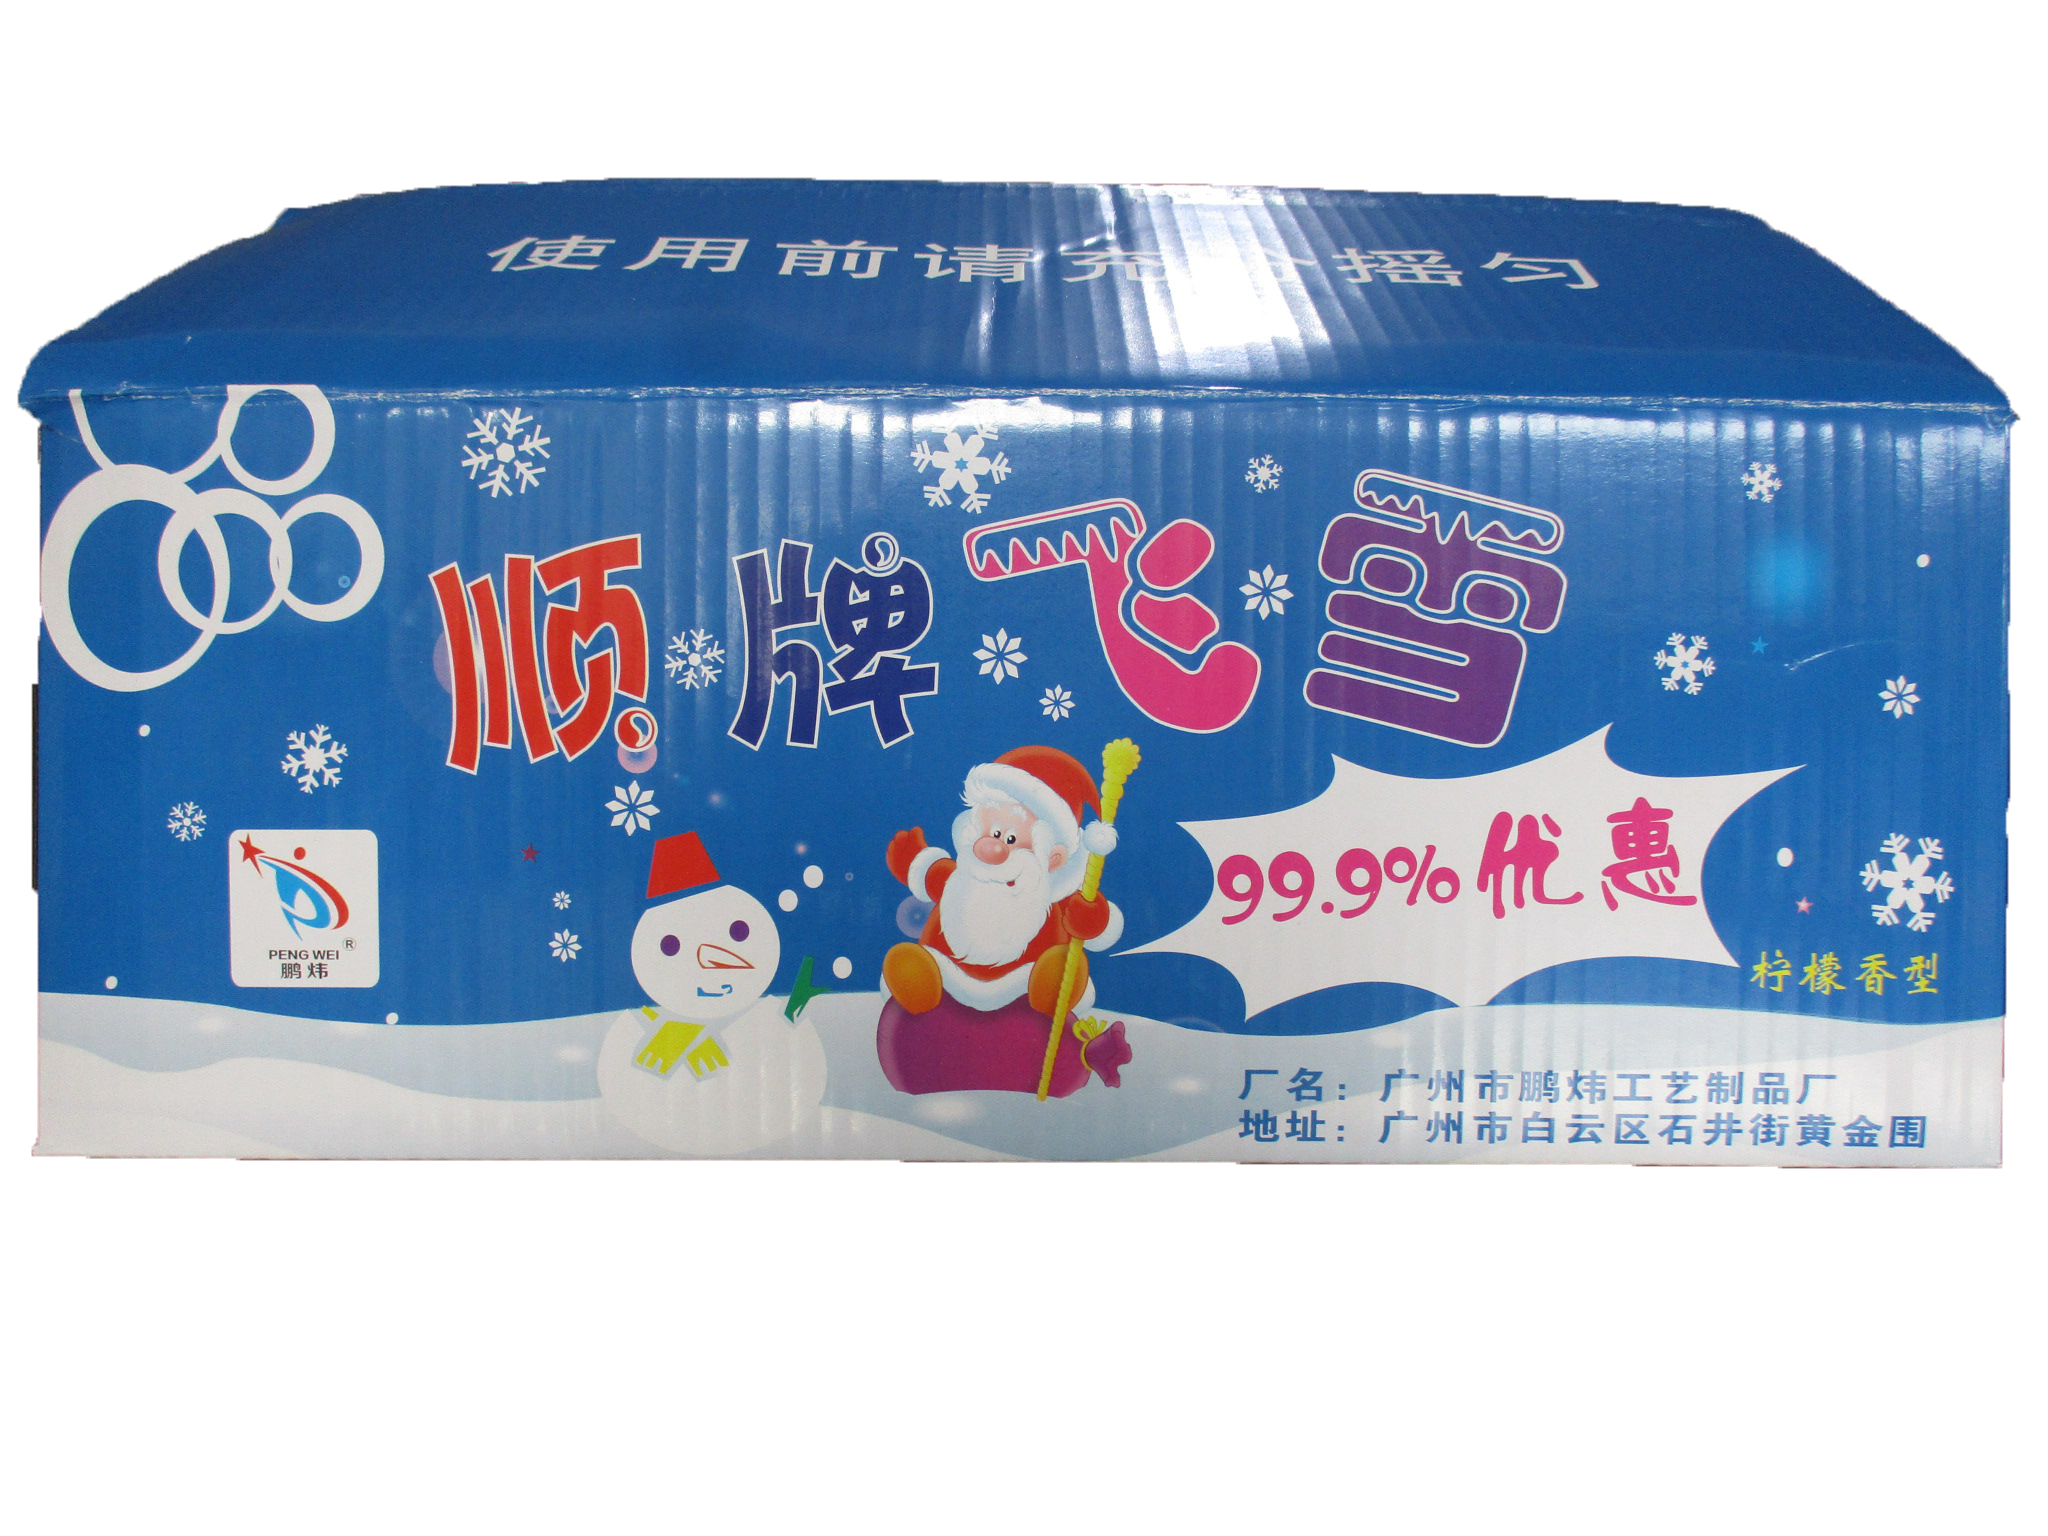 shunpai snow spray carton2 